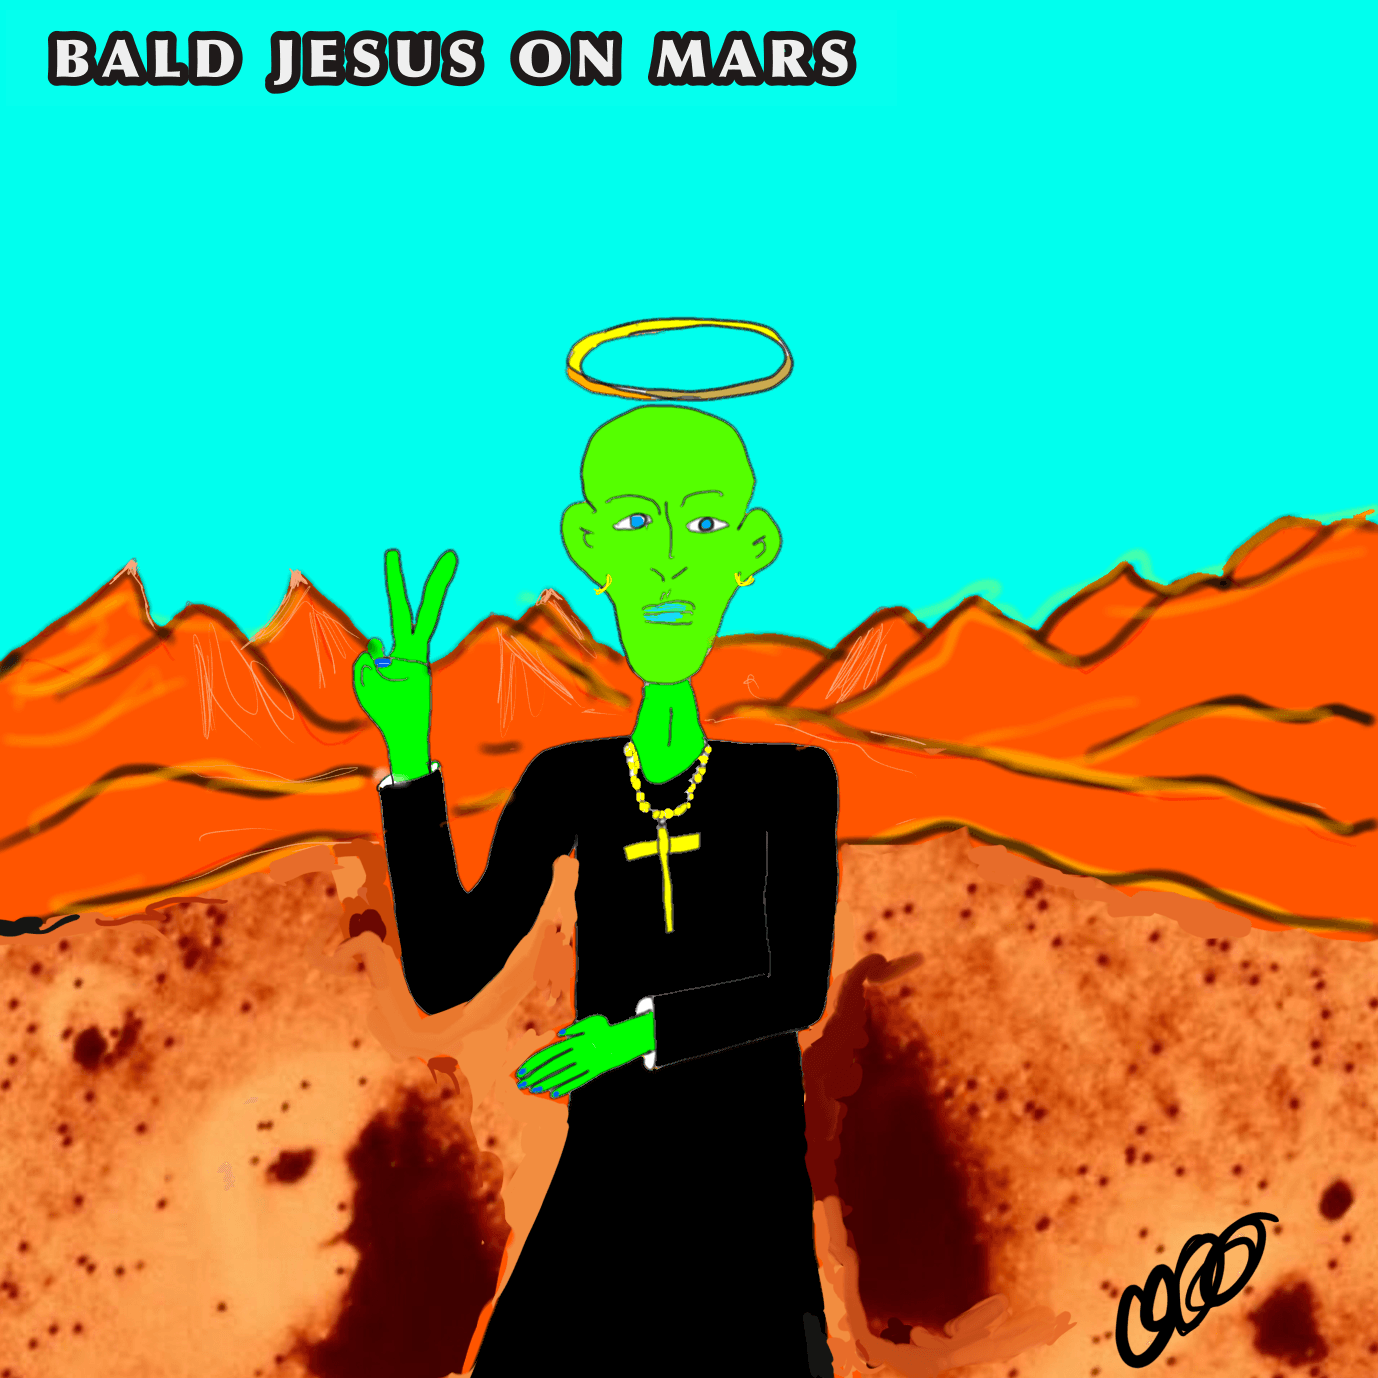 Bald Jesus on Mars by Vagobond